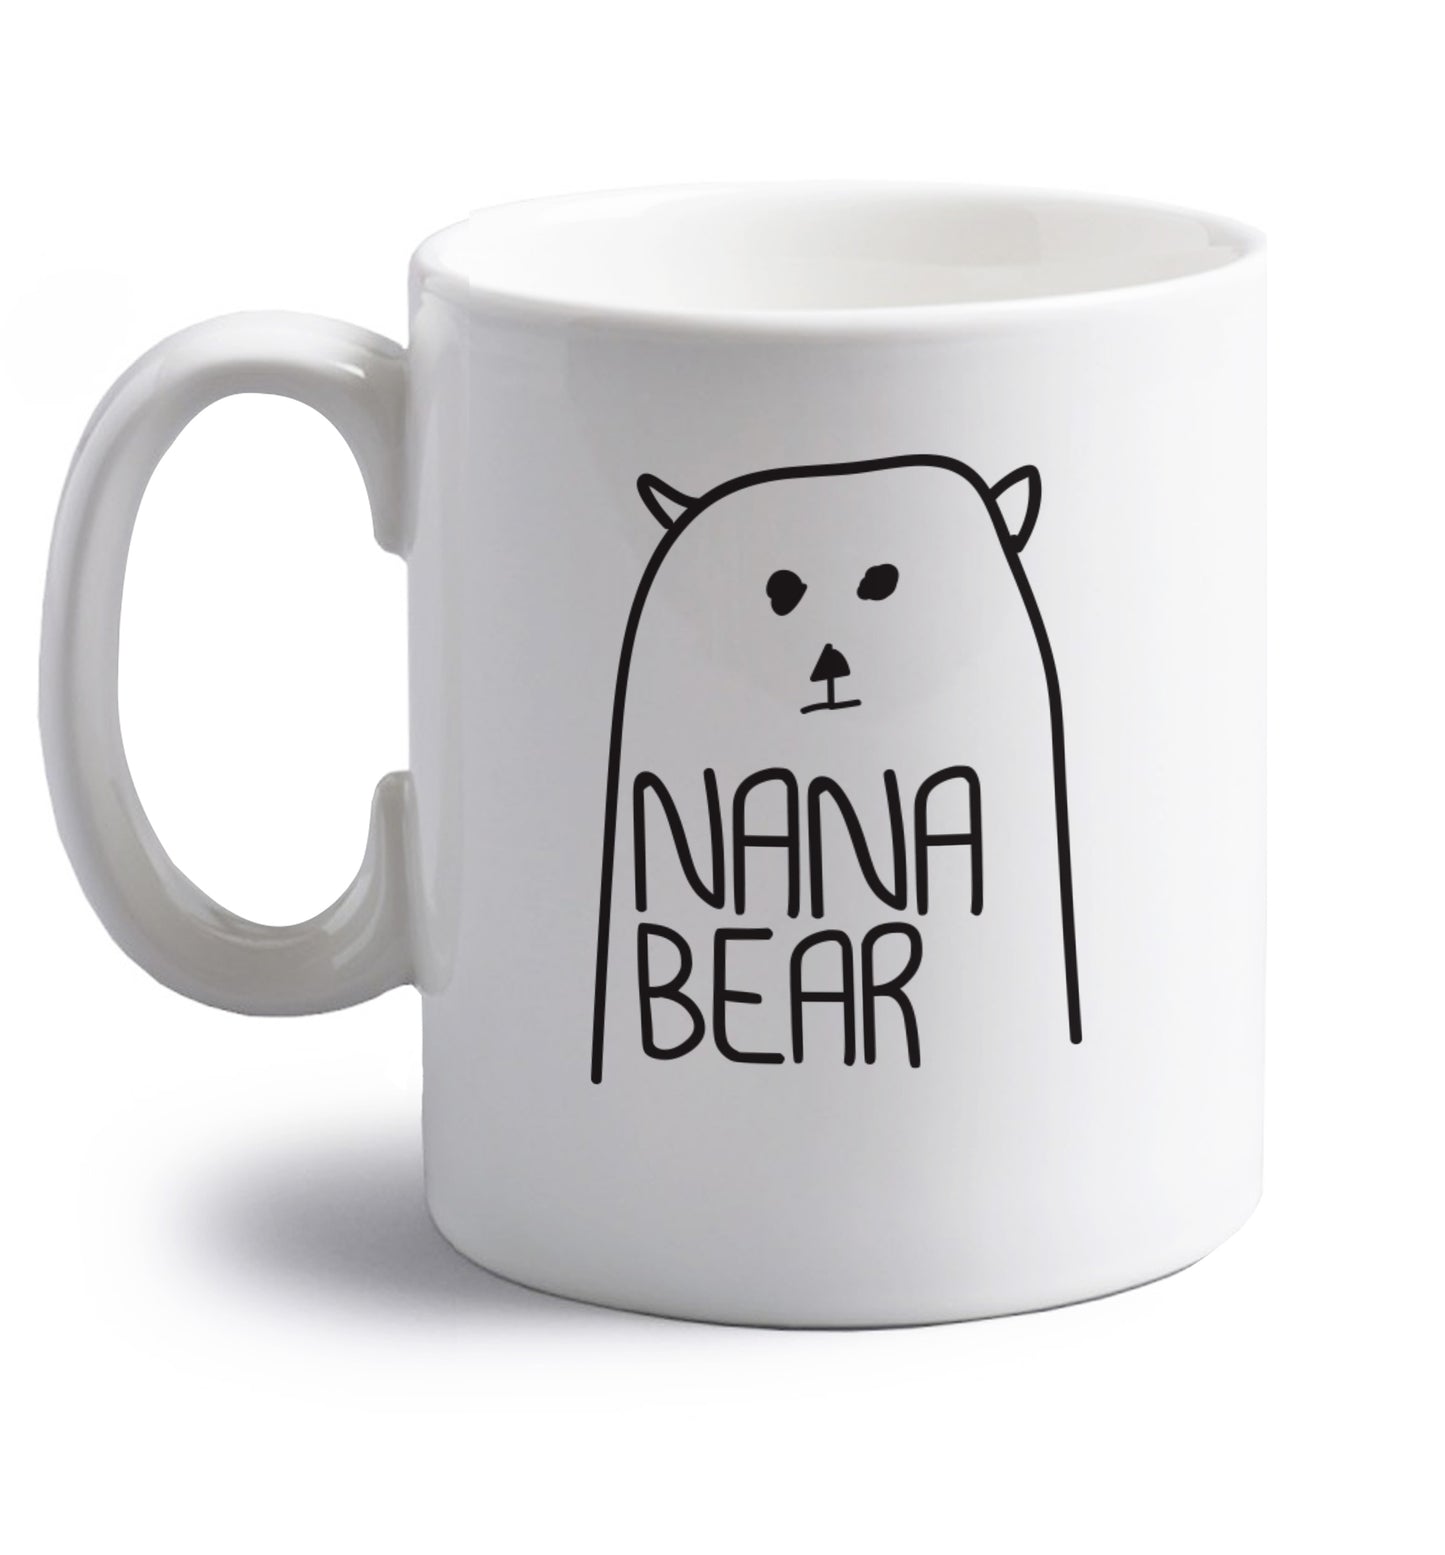 Nana bear right handed white ceramic mug 